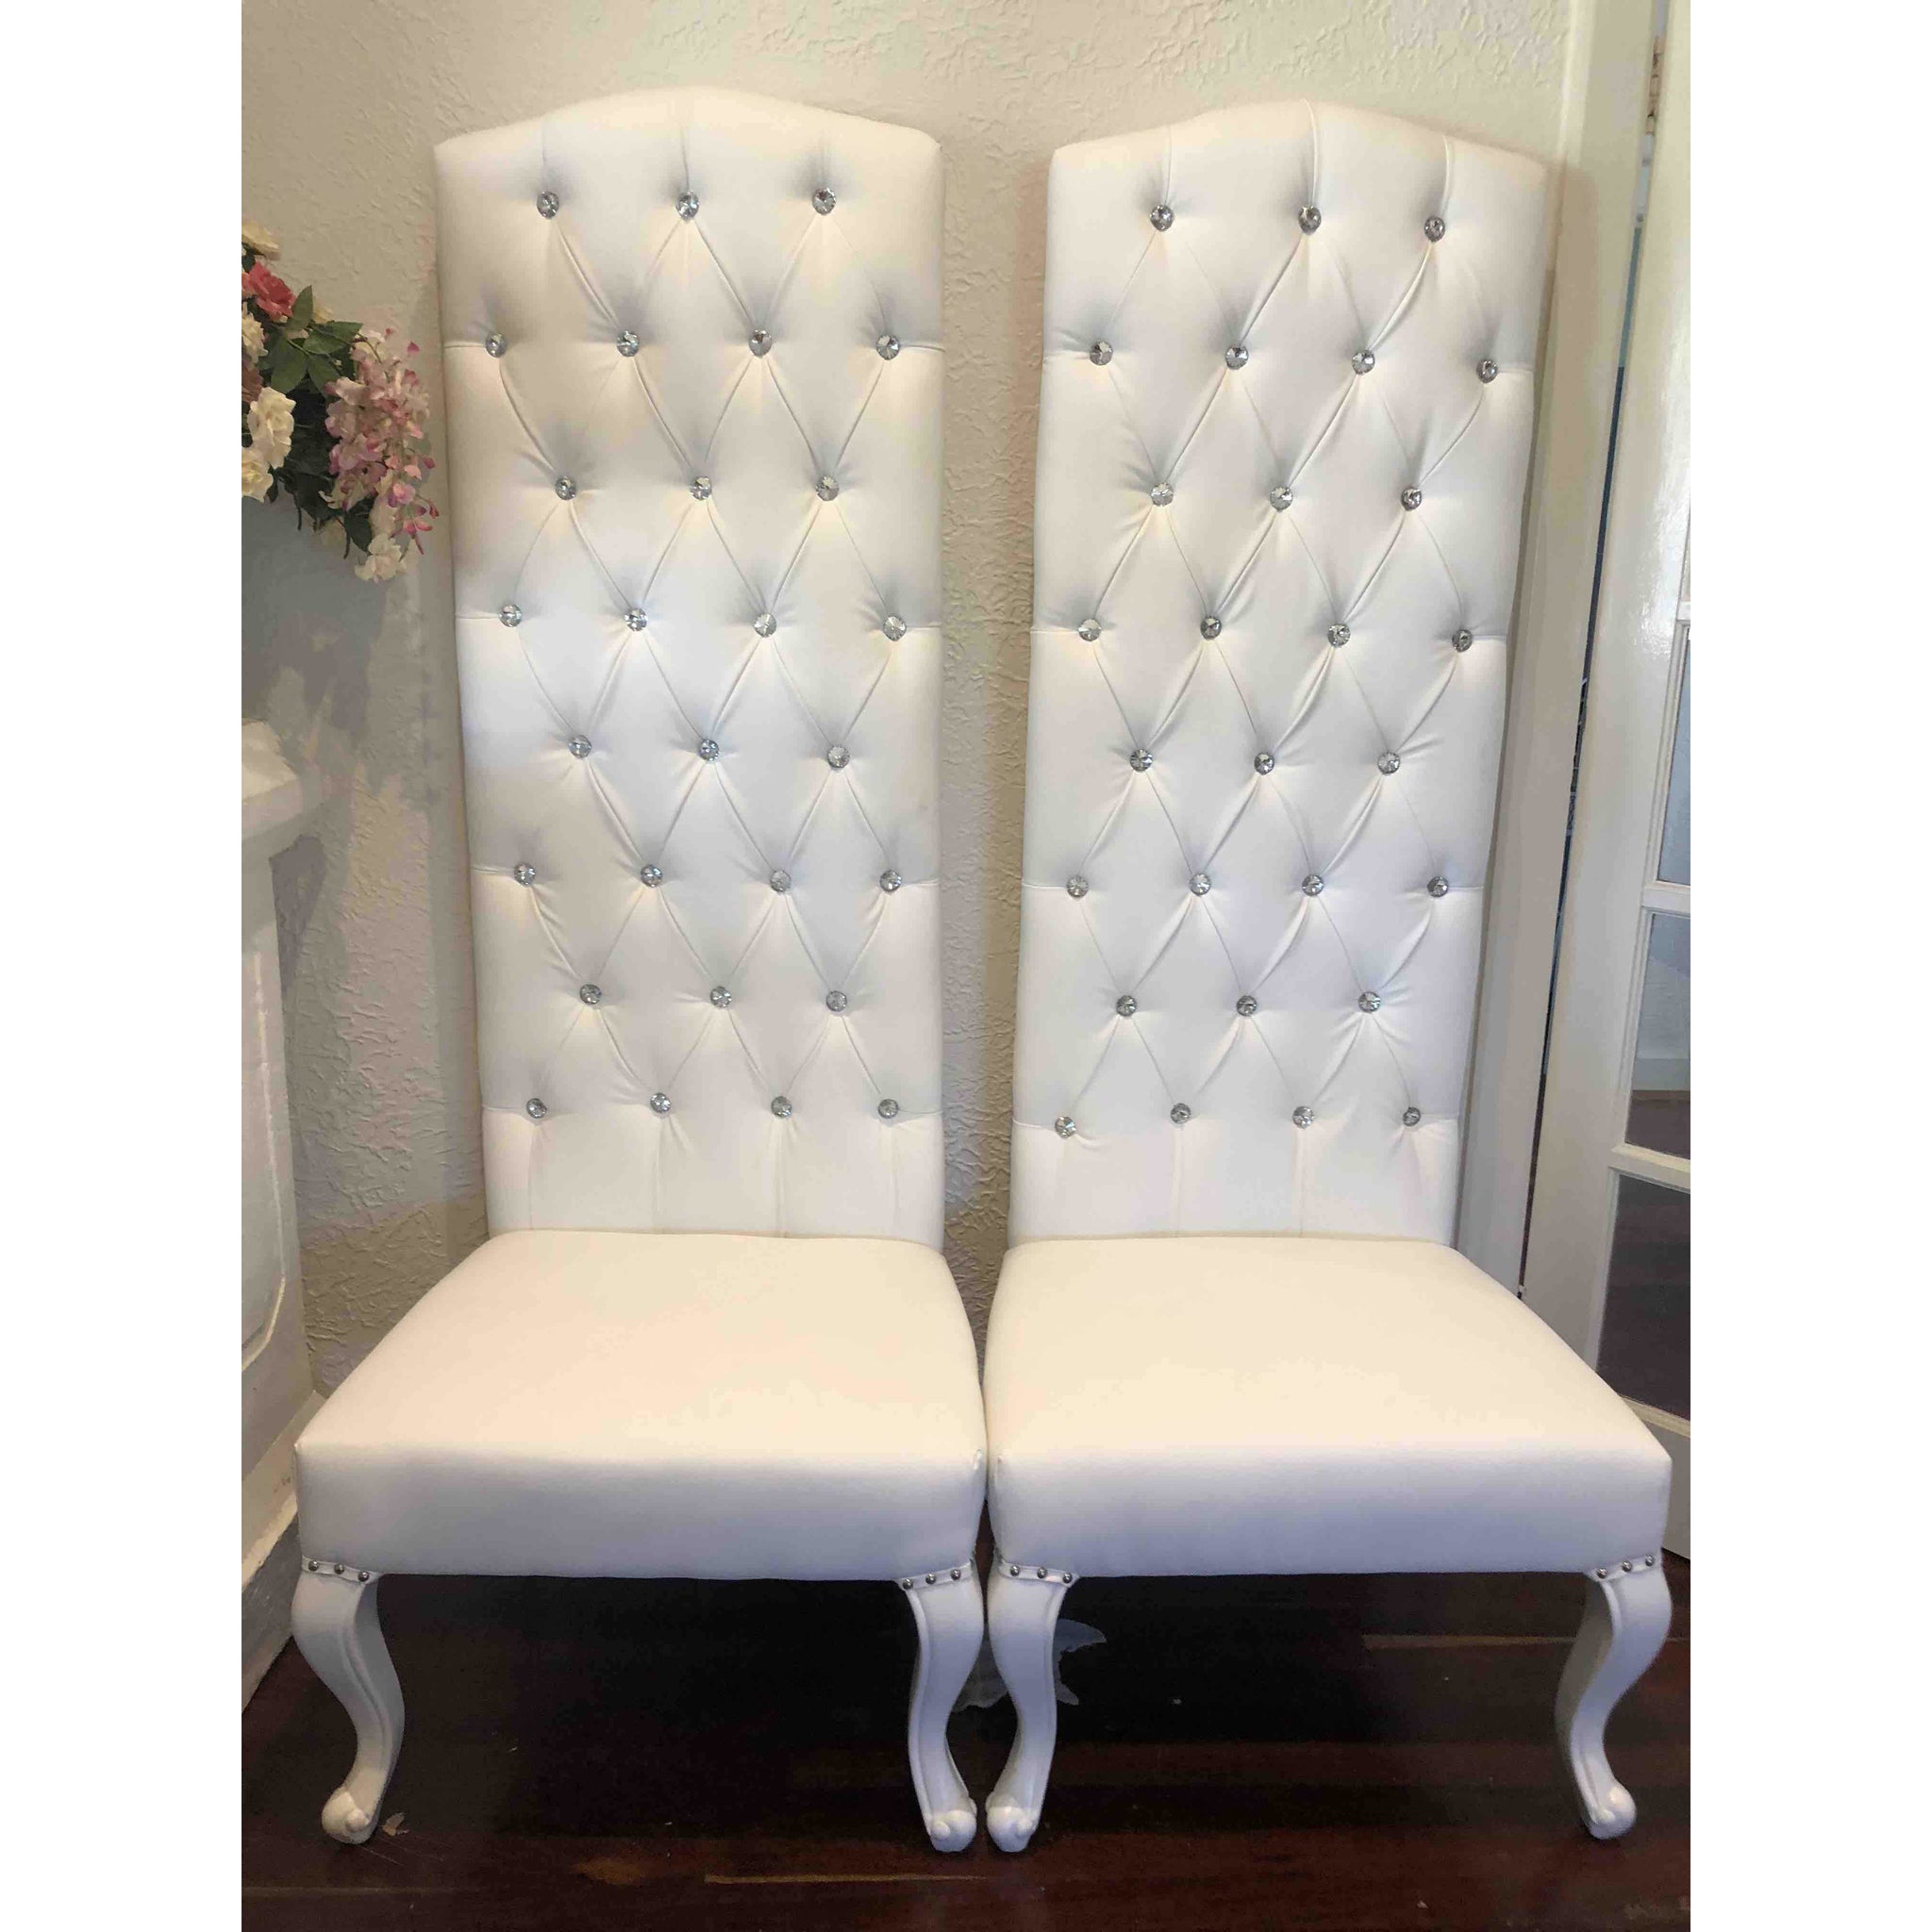 White bride&groom throne chair - Set 7